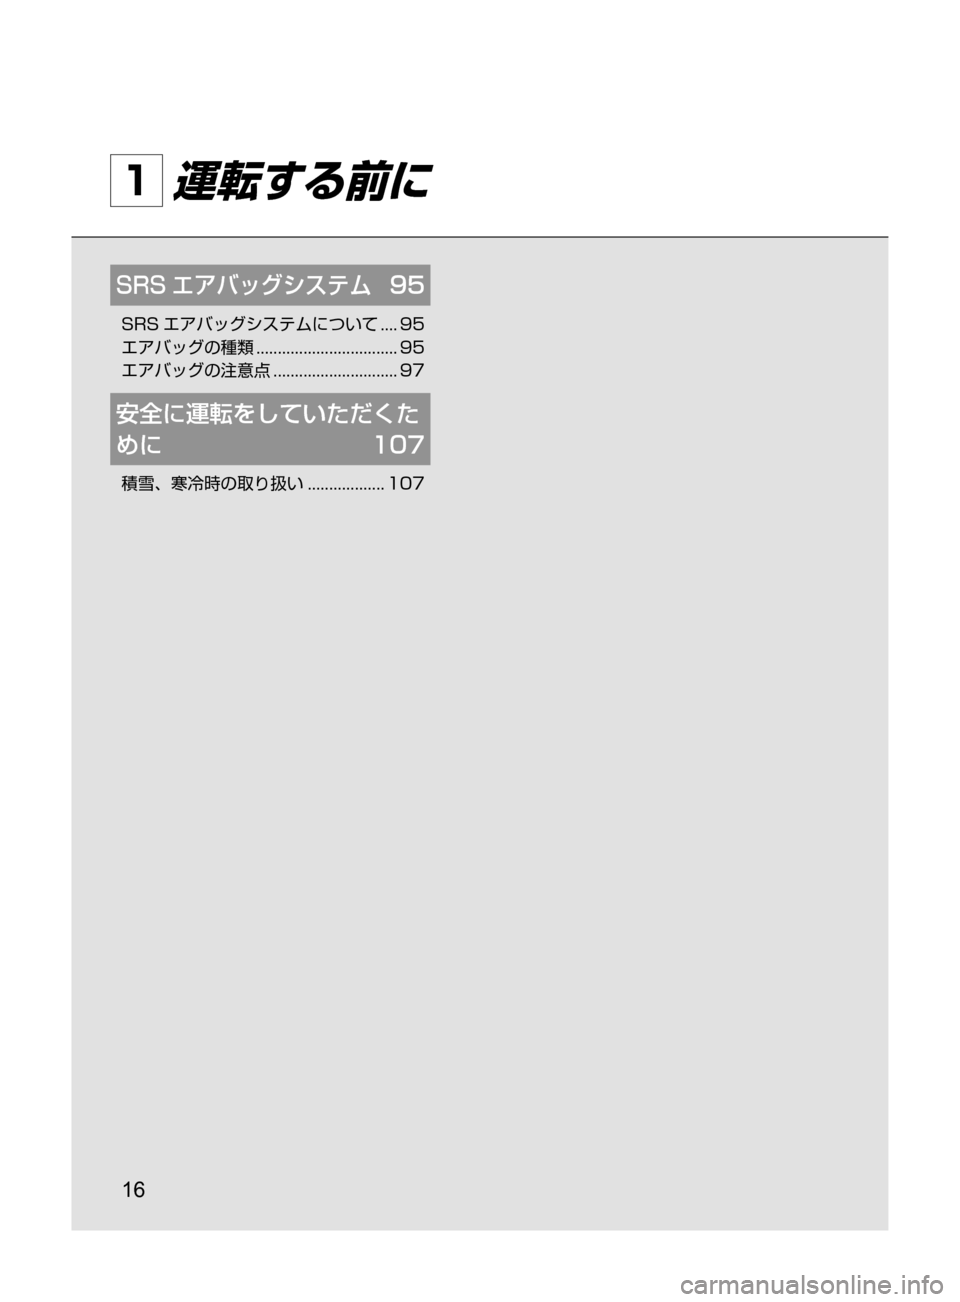 MAZDA MODEL ATENZA 2016  アテンザ｜取扱説明書 (in Japanese) 16
1 運転する前に
SRS エアバッグシステム	 95
SRS エアバッグシステムについて﻿﻿.... 95
エアバッグの種類 ﻿﻿
................................. 95
エアバッ